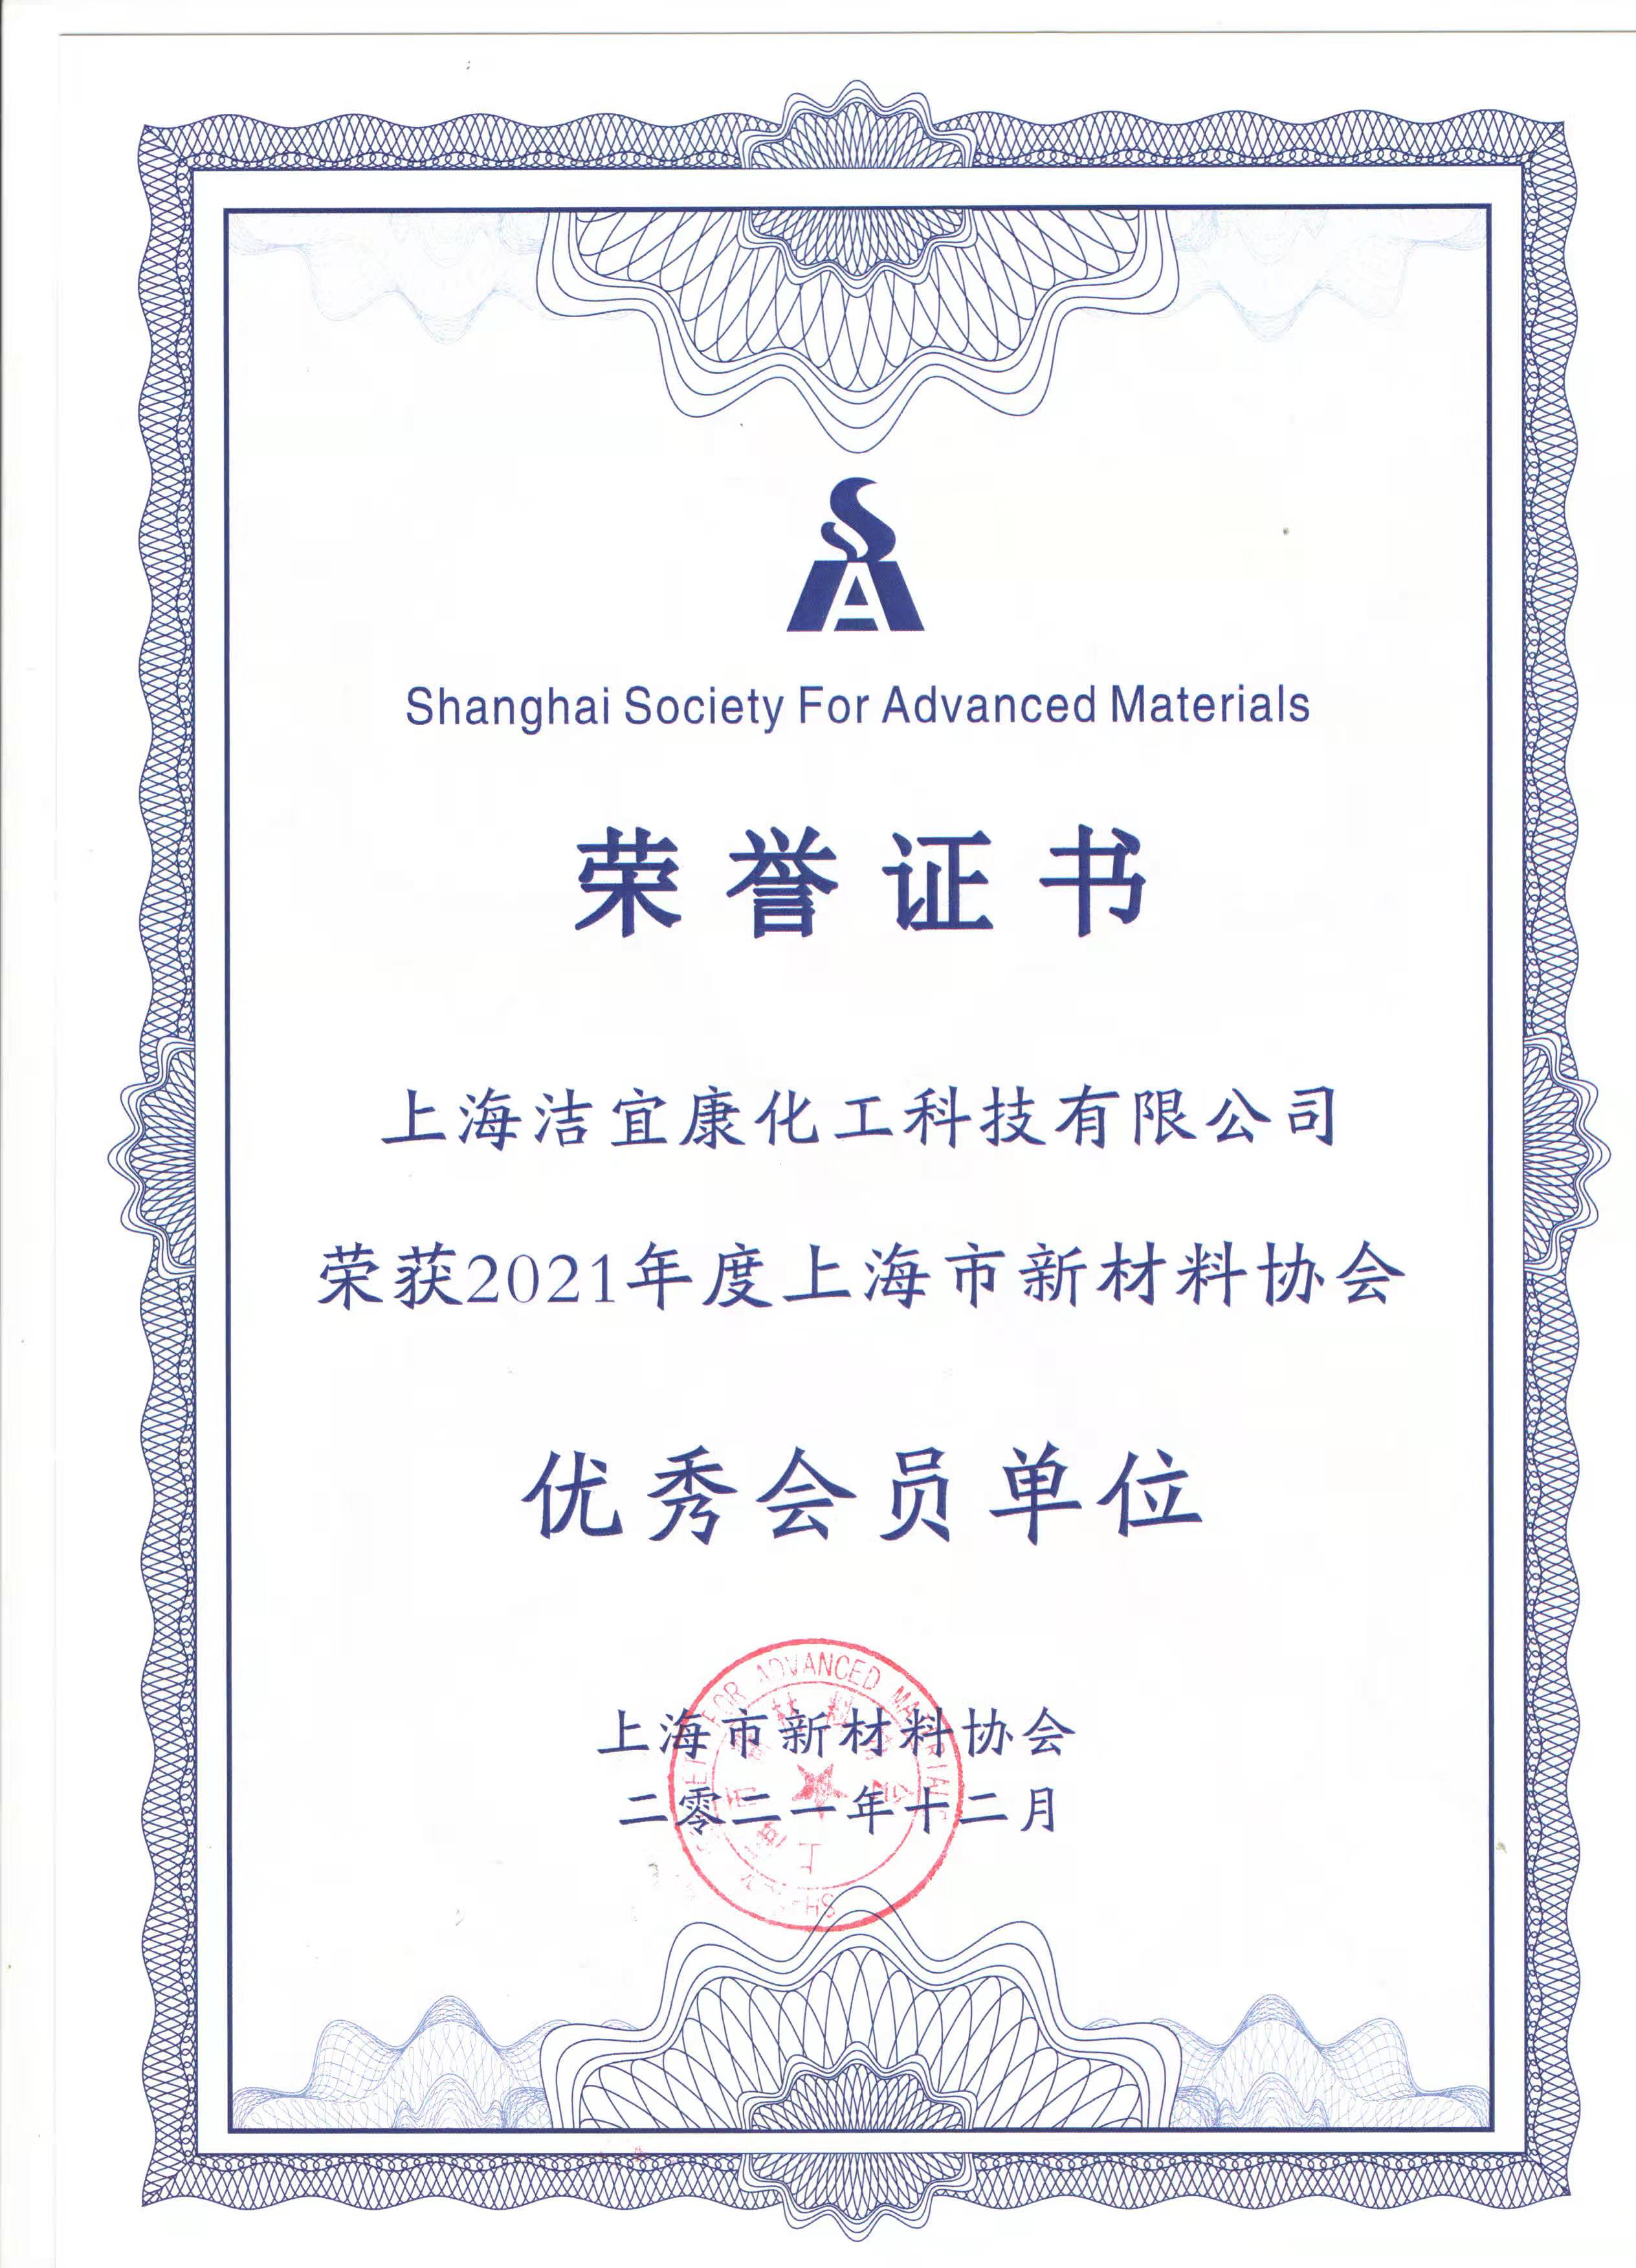 Excellent member unit of Shanghai New Materials Association